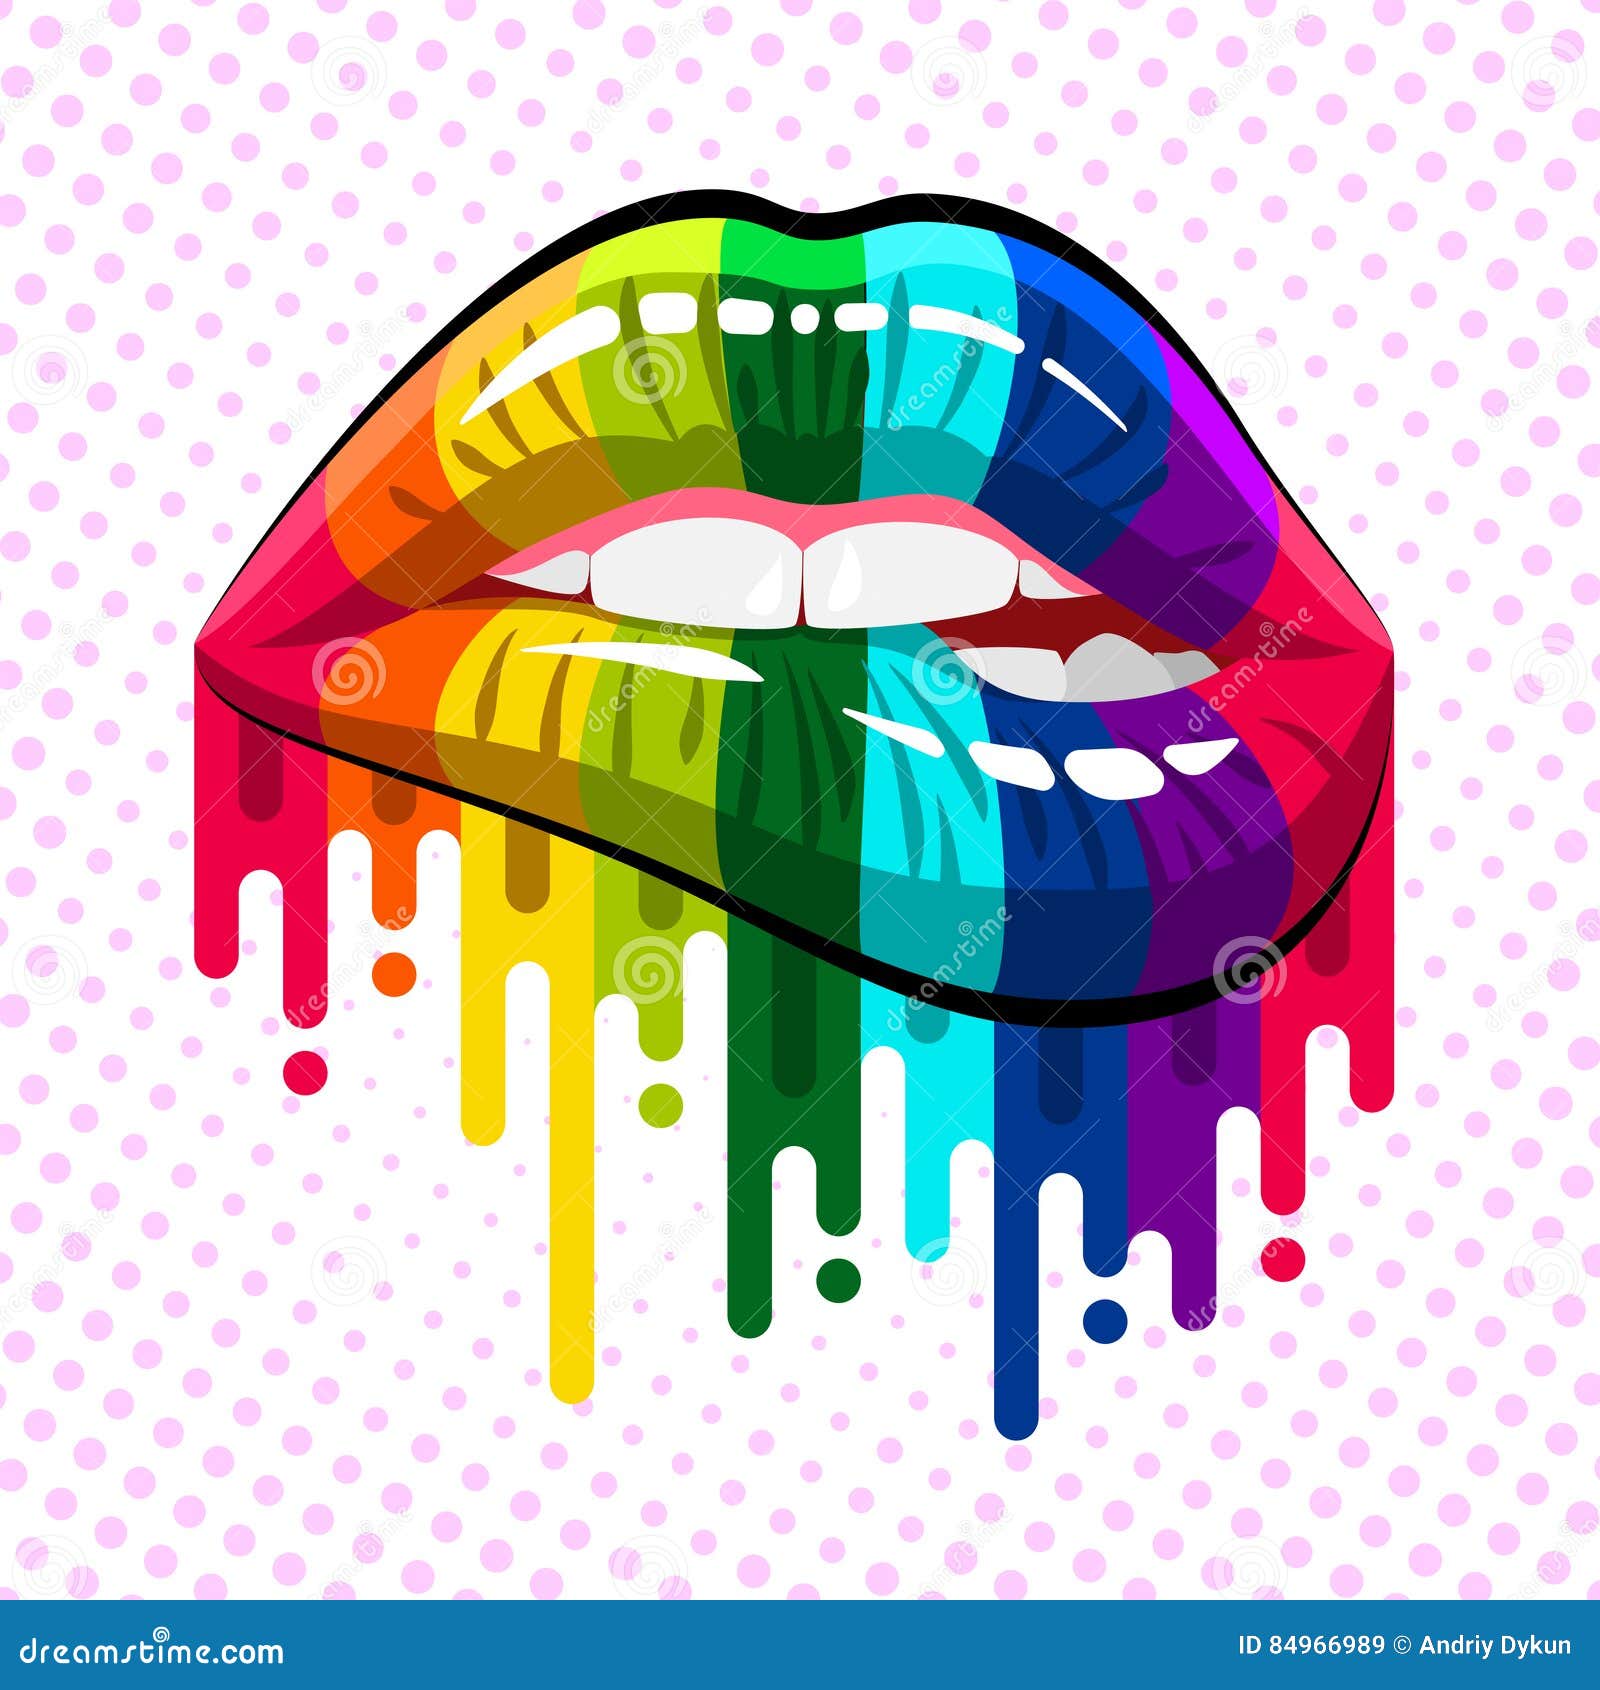 rainbow color lips